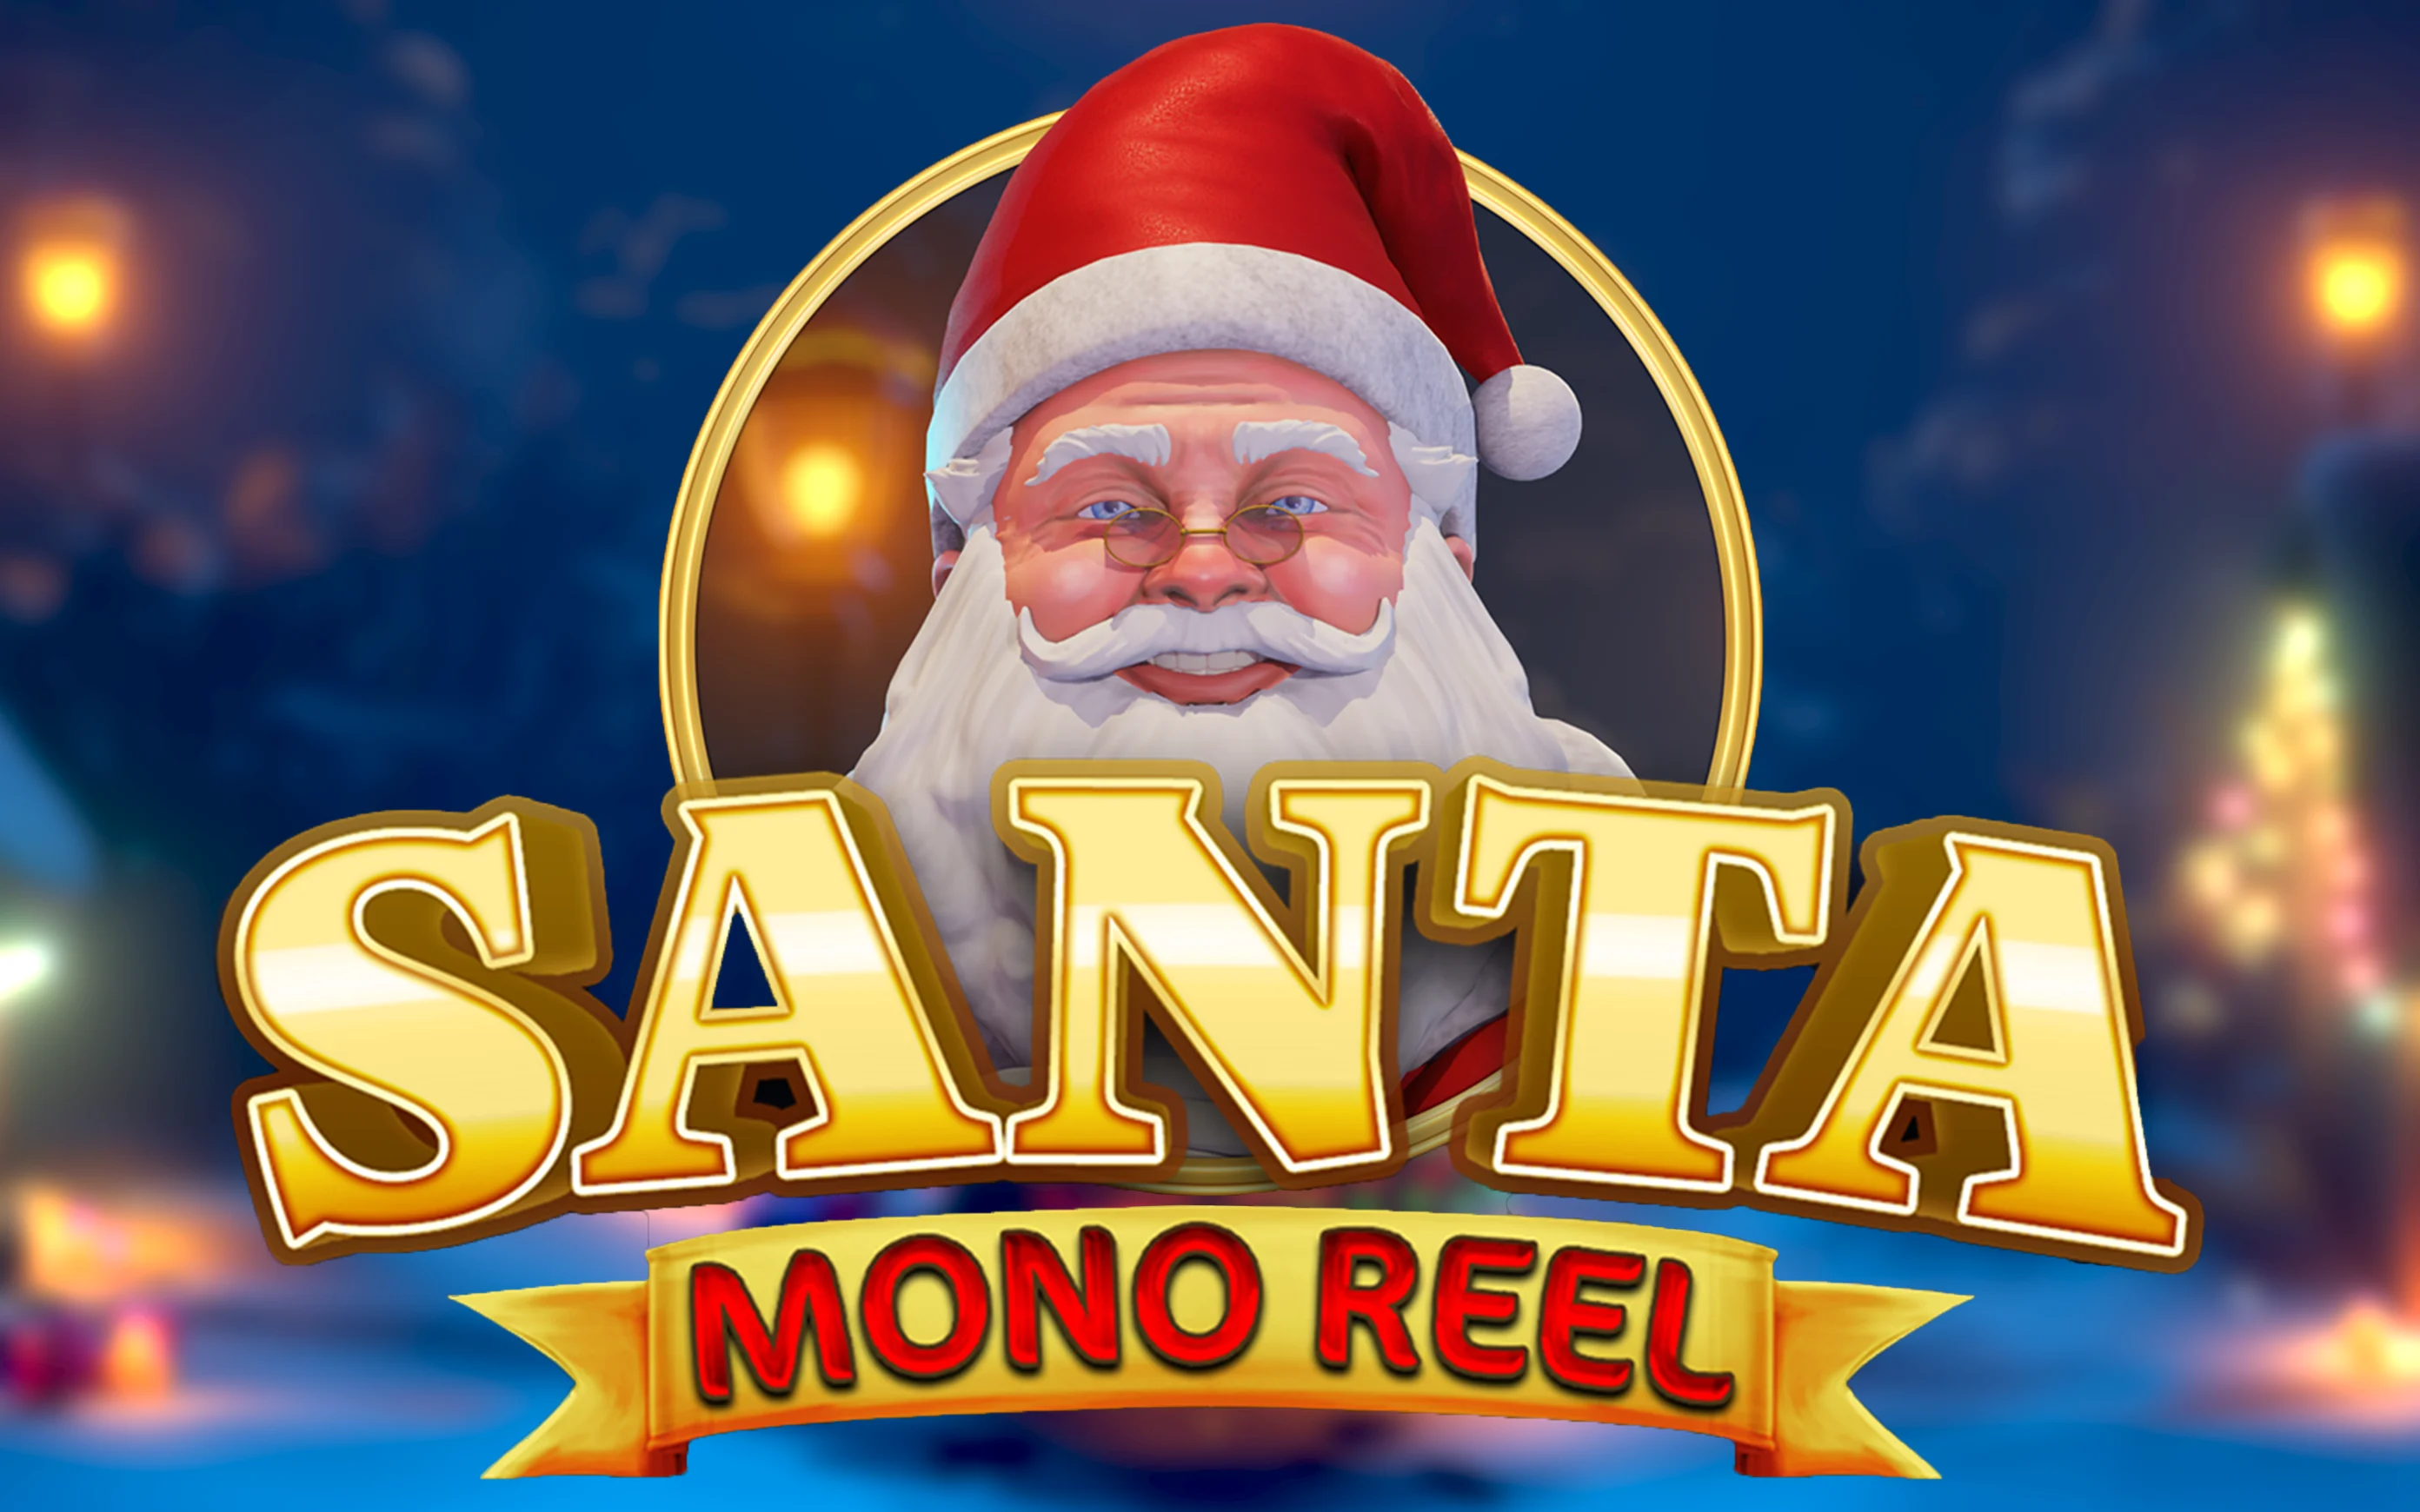 Joacă Mono Reel Santa în cazinoul online Starcasino.be